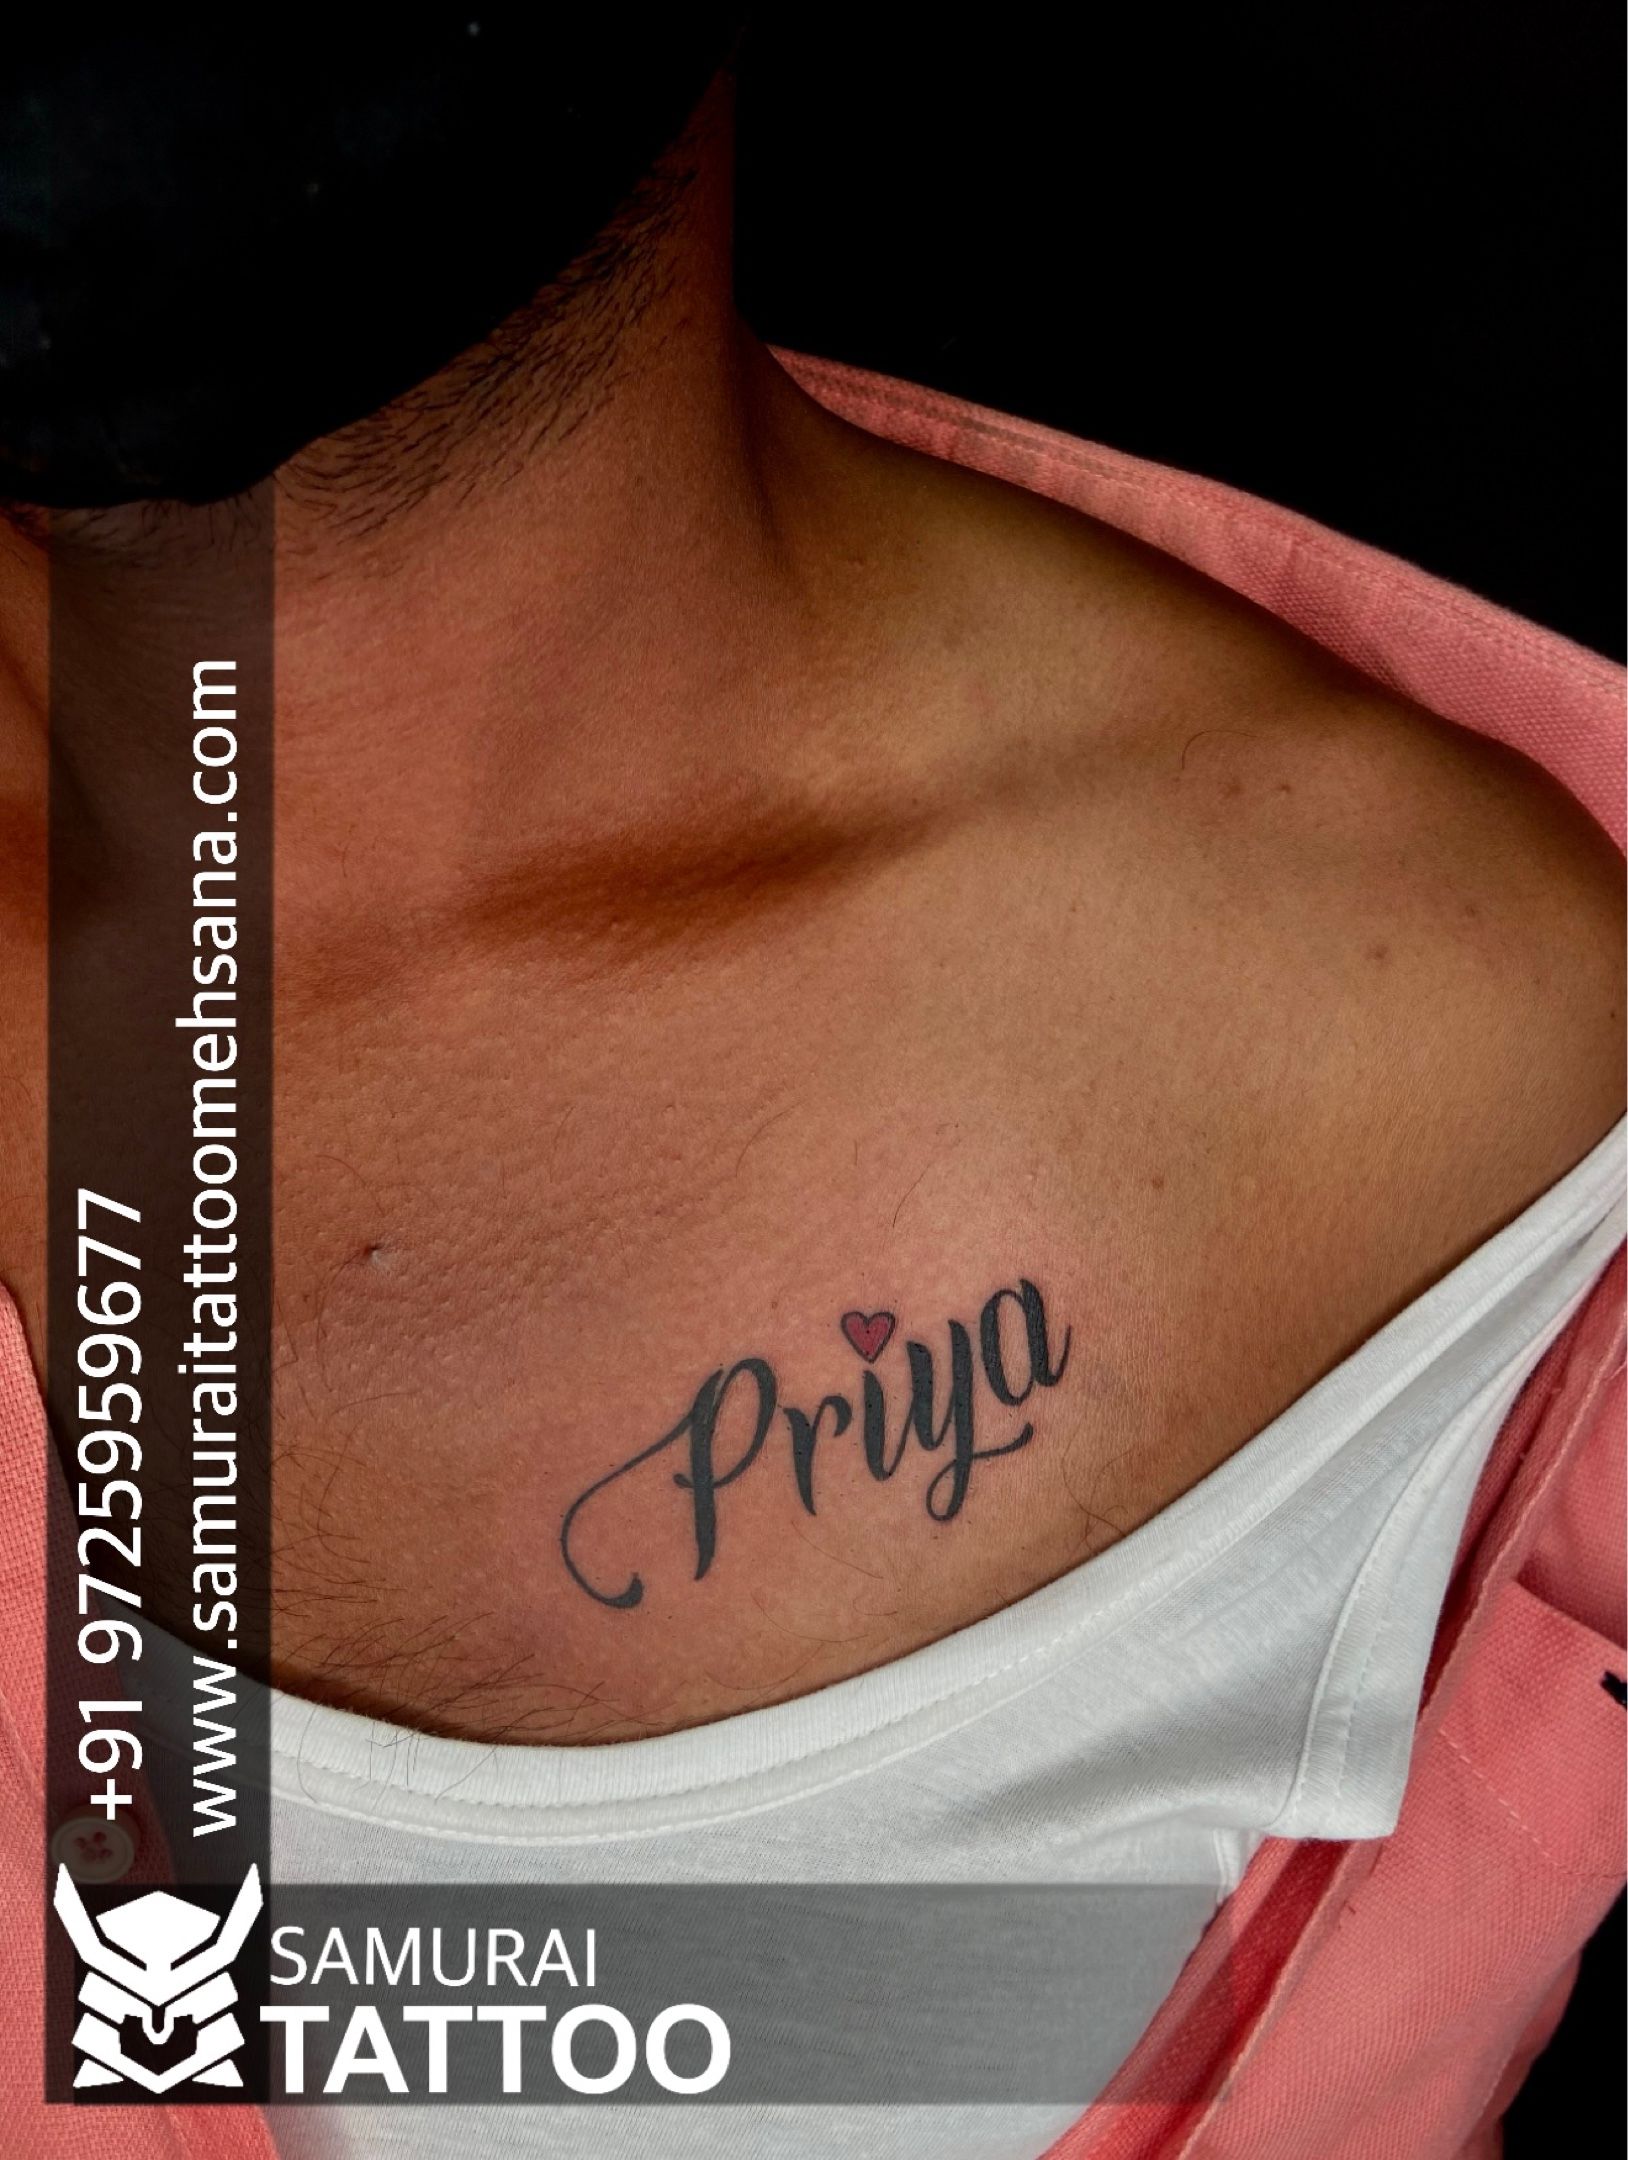 Priya name tattoo design2019  amazing hand tattoo for girl  Requested  video  YouTube